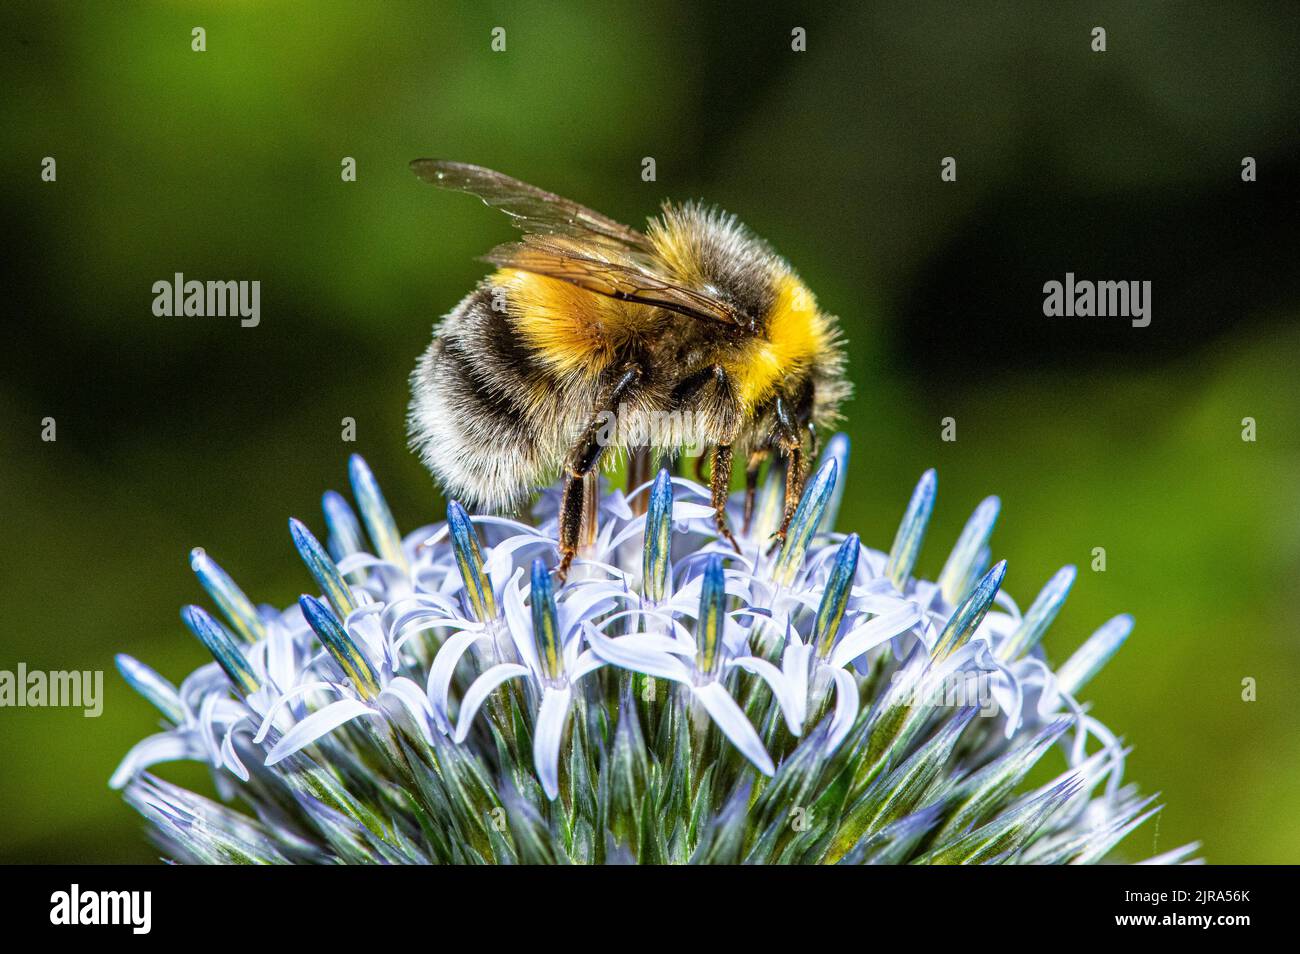 A White-tailed bumblebee on alium flower, Chipping, Preston, Lancashire, UK Stock Photo